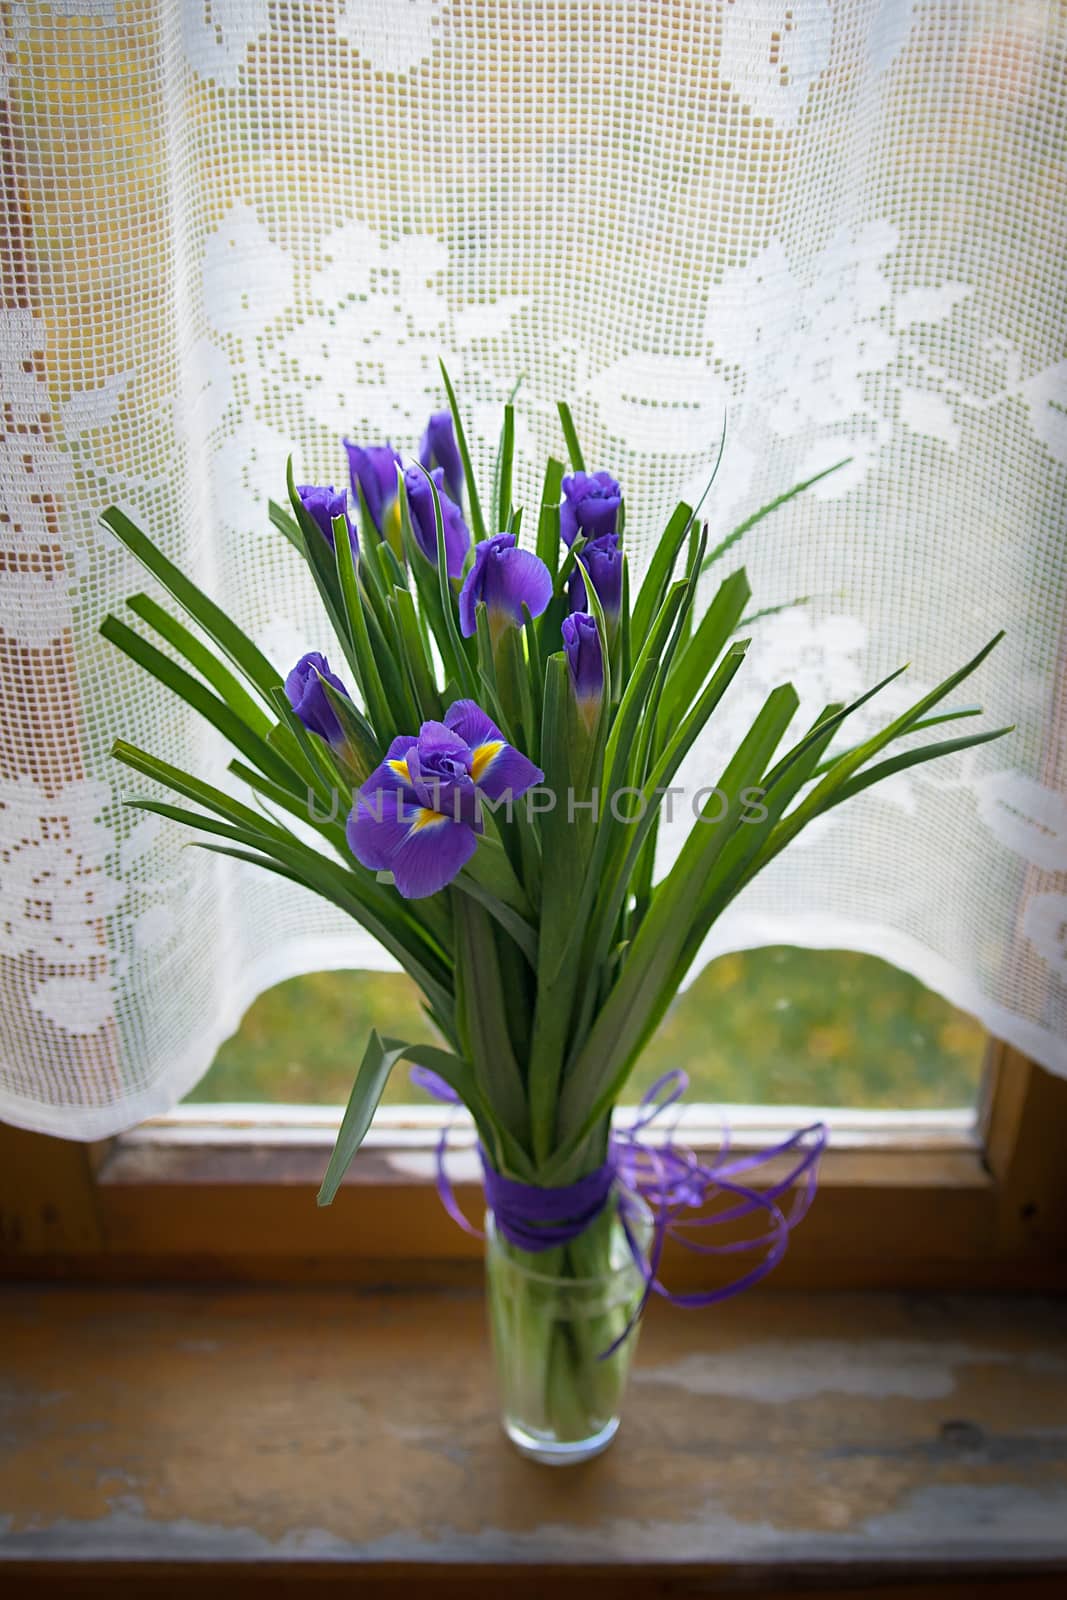 Purple iris flowers in vase, on wooden table near the window